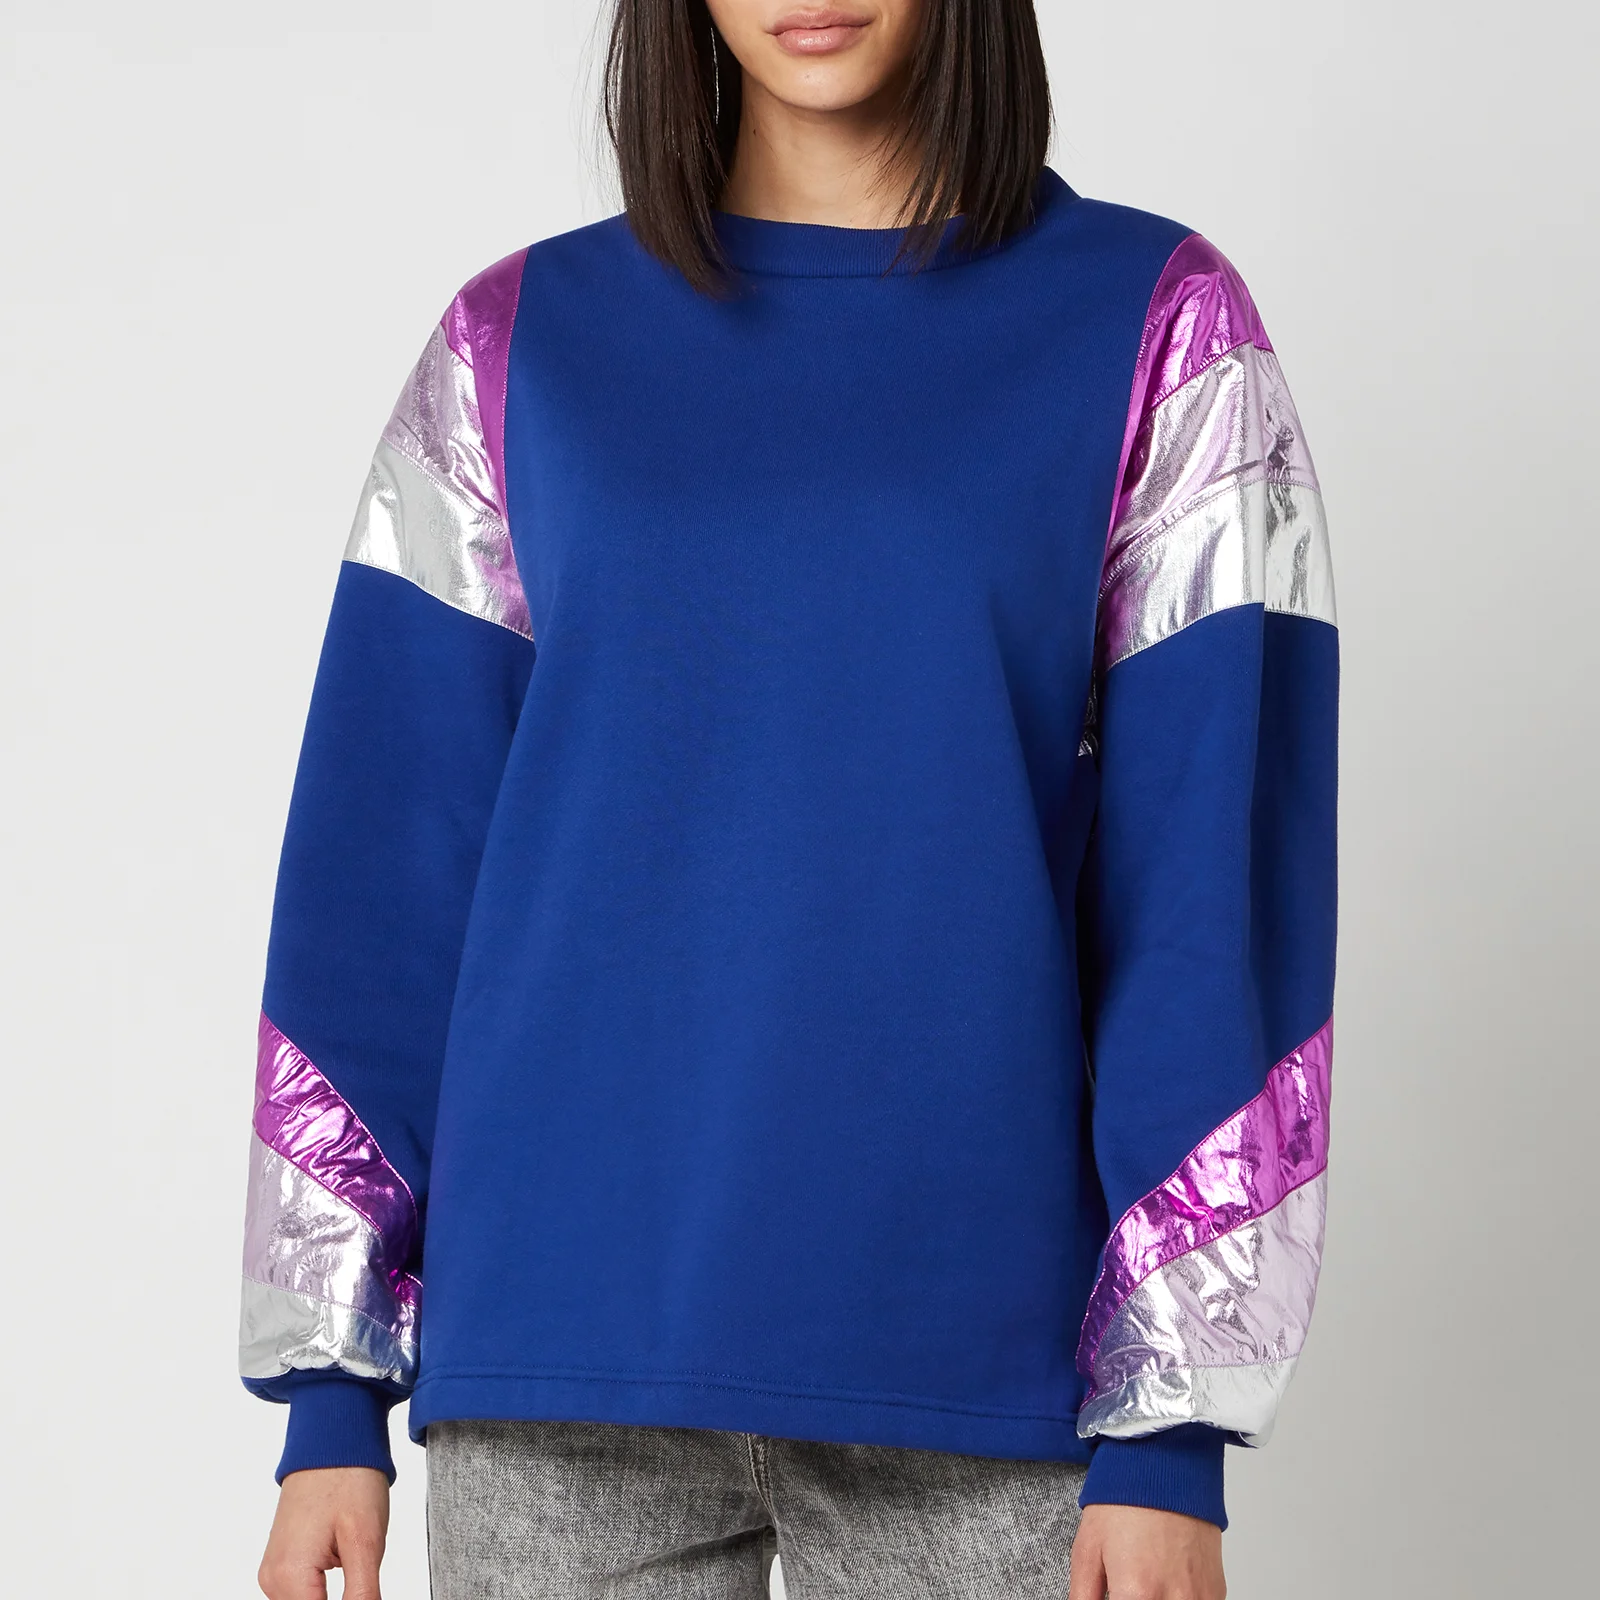 Marant Etoile Women's Menji Sweatshirt - Electric Blue Image 1